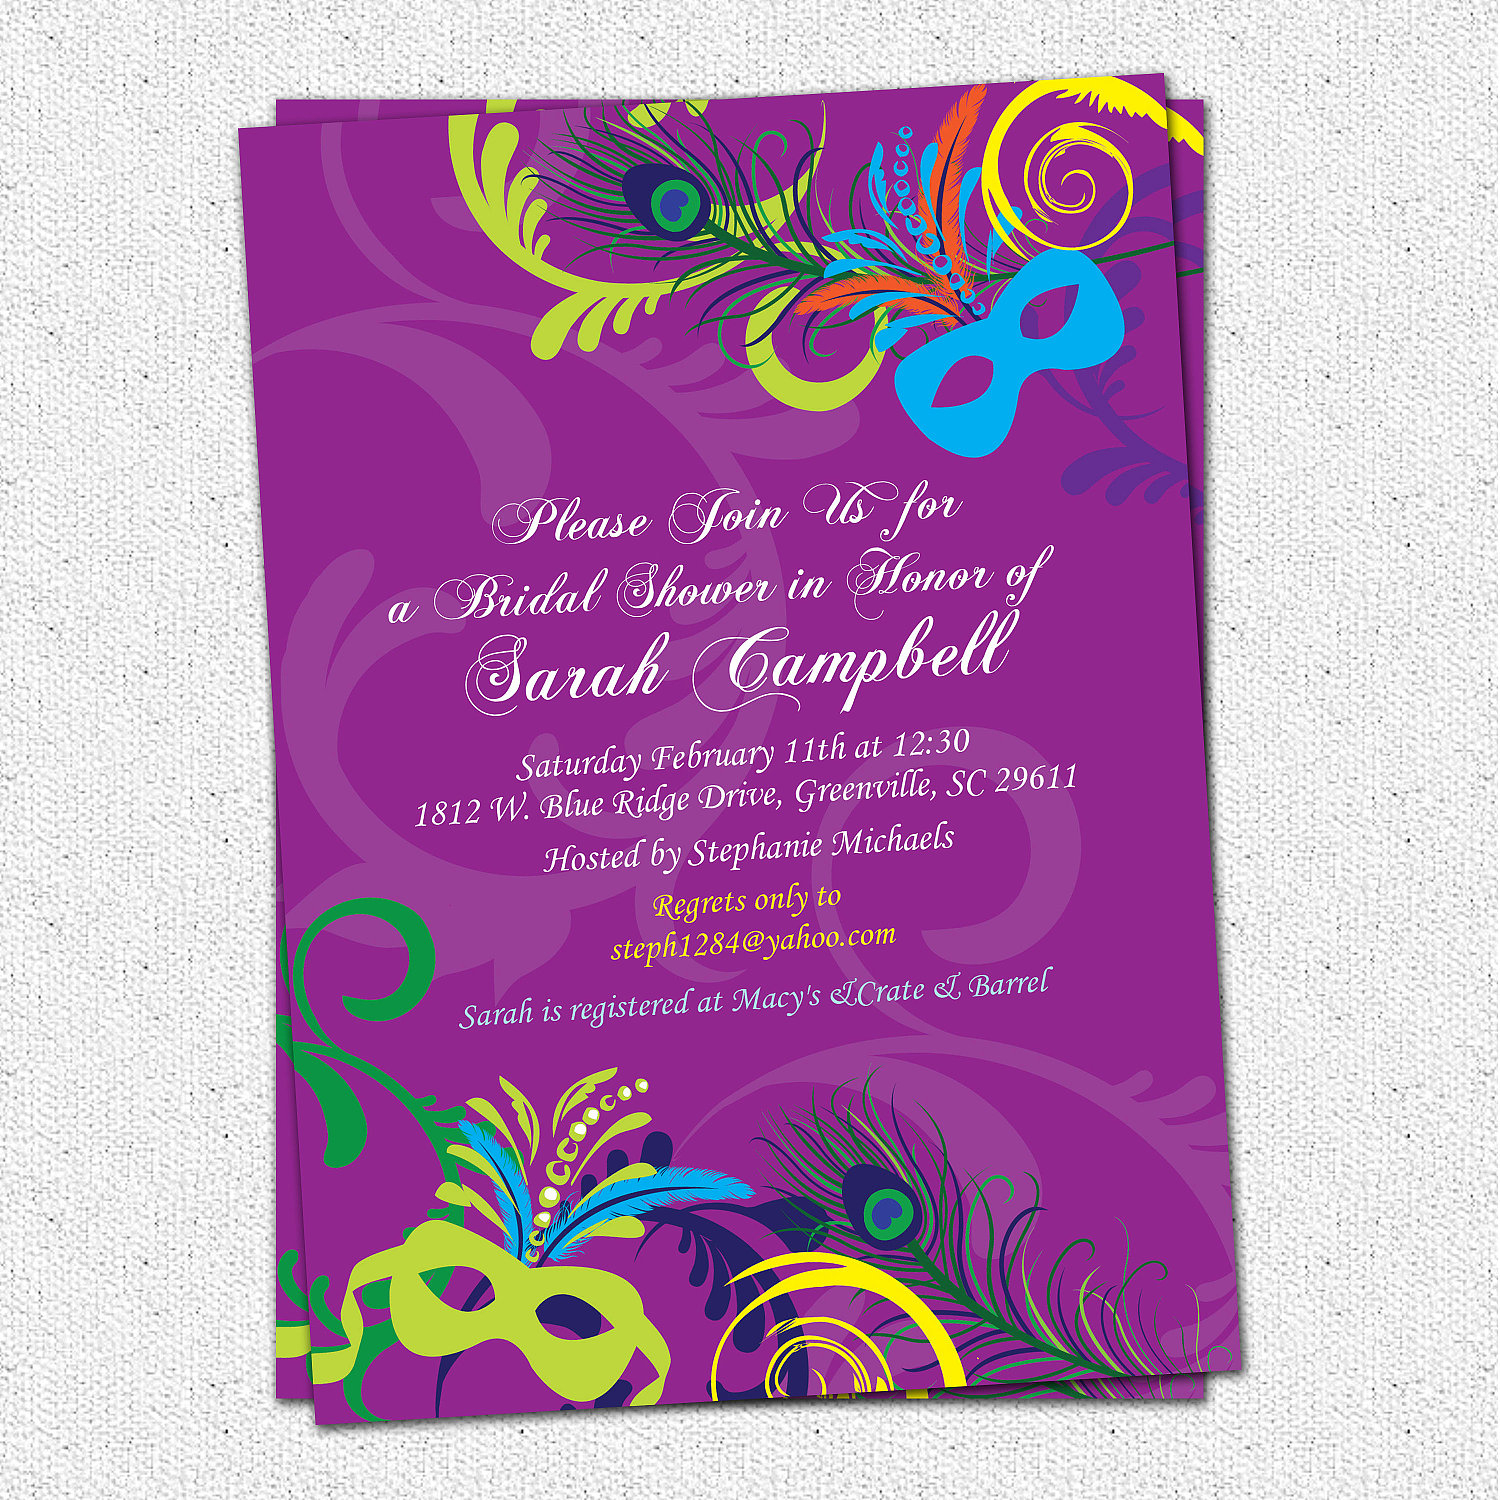 Bridal Shower Invitations, Mardigras, Mardi Gras, Wedding Invitation - Free Printable Mardi Gras Invitations